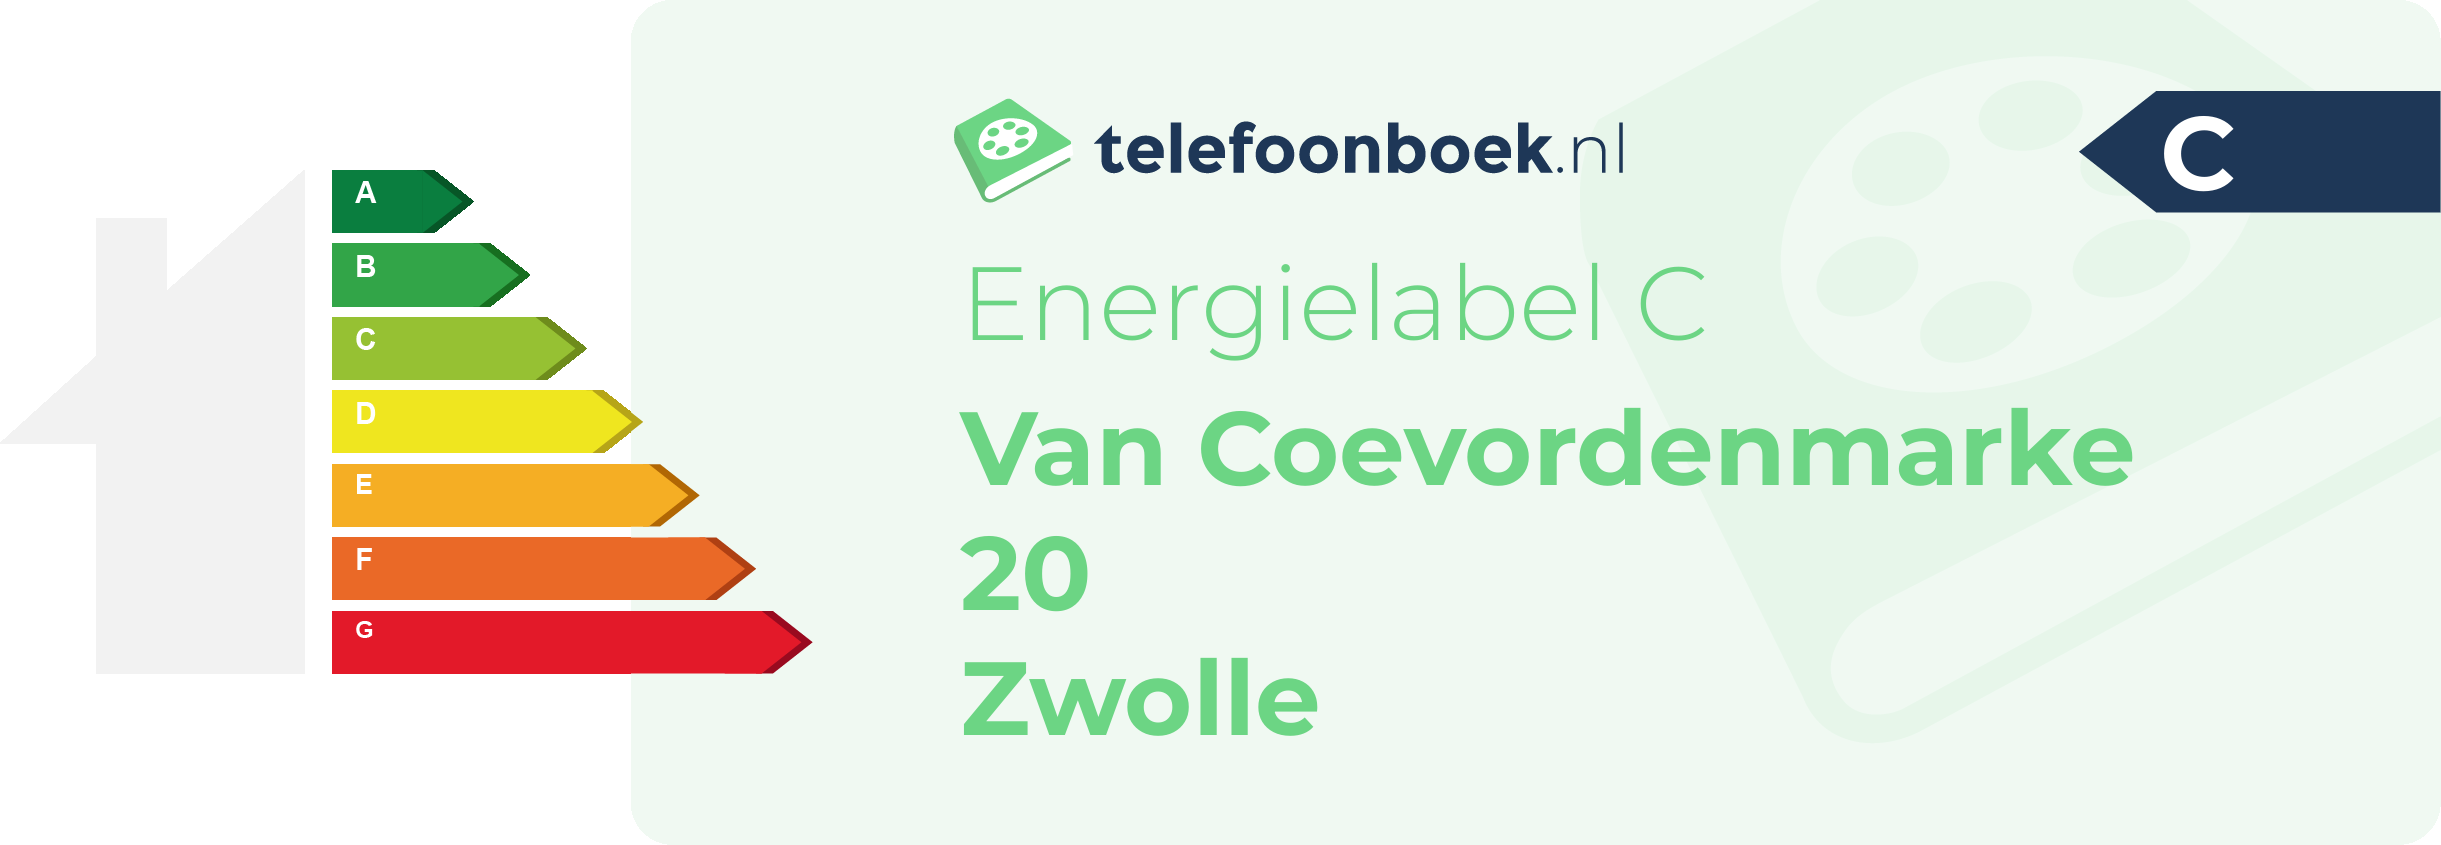 Energielabel Van Coevordenmarke 20 Zwolle